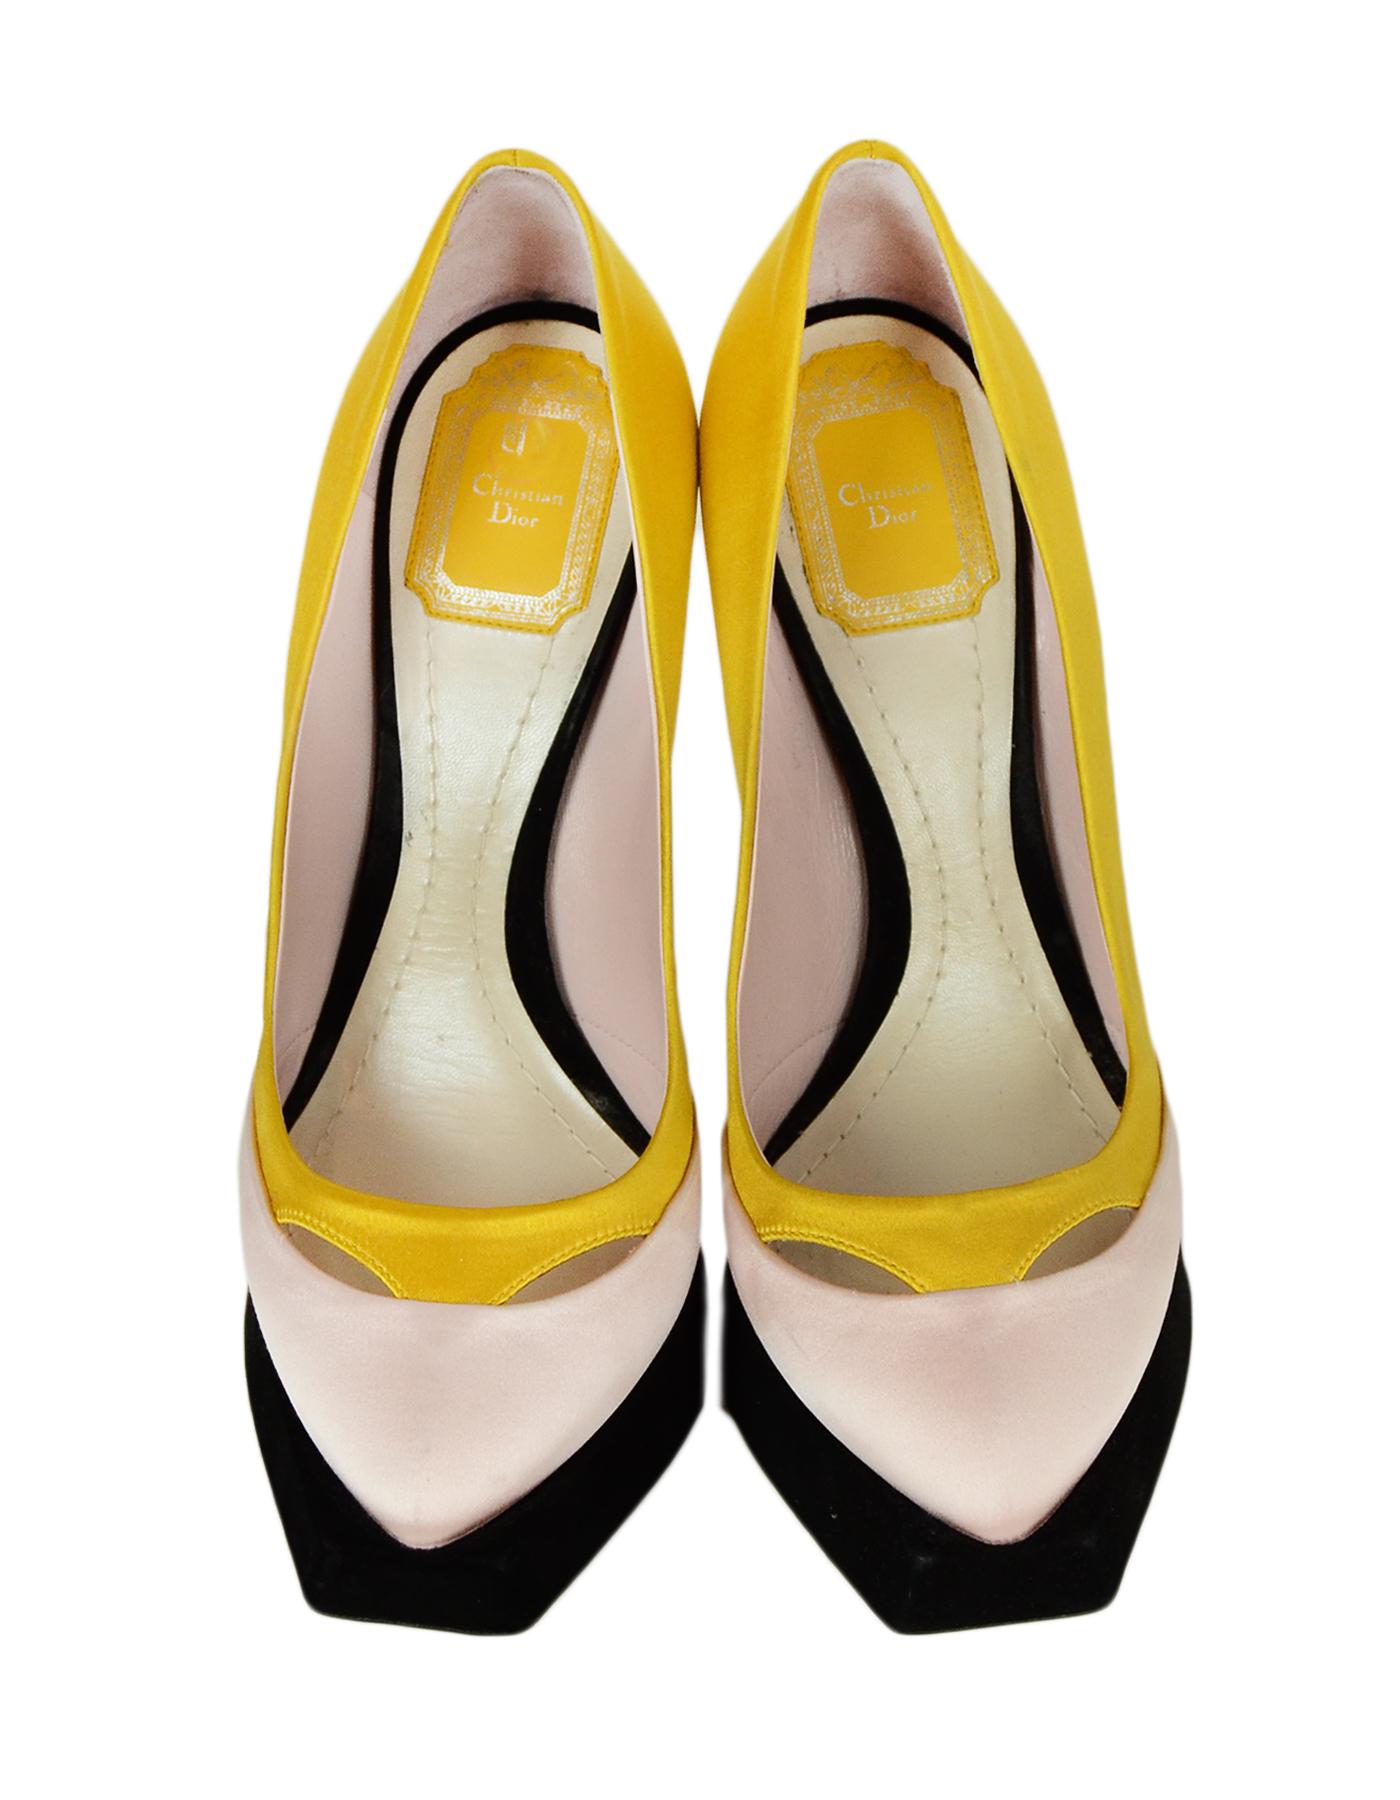 Women's Christian Dior Yellow/Black/Pink Satin Platform Pumps sz 39